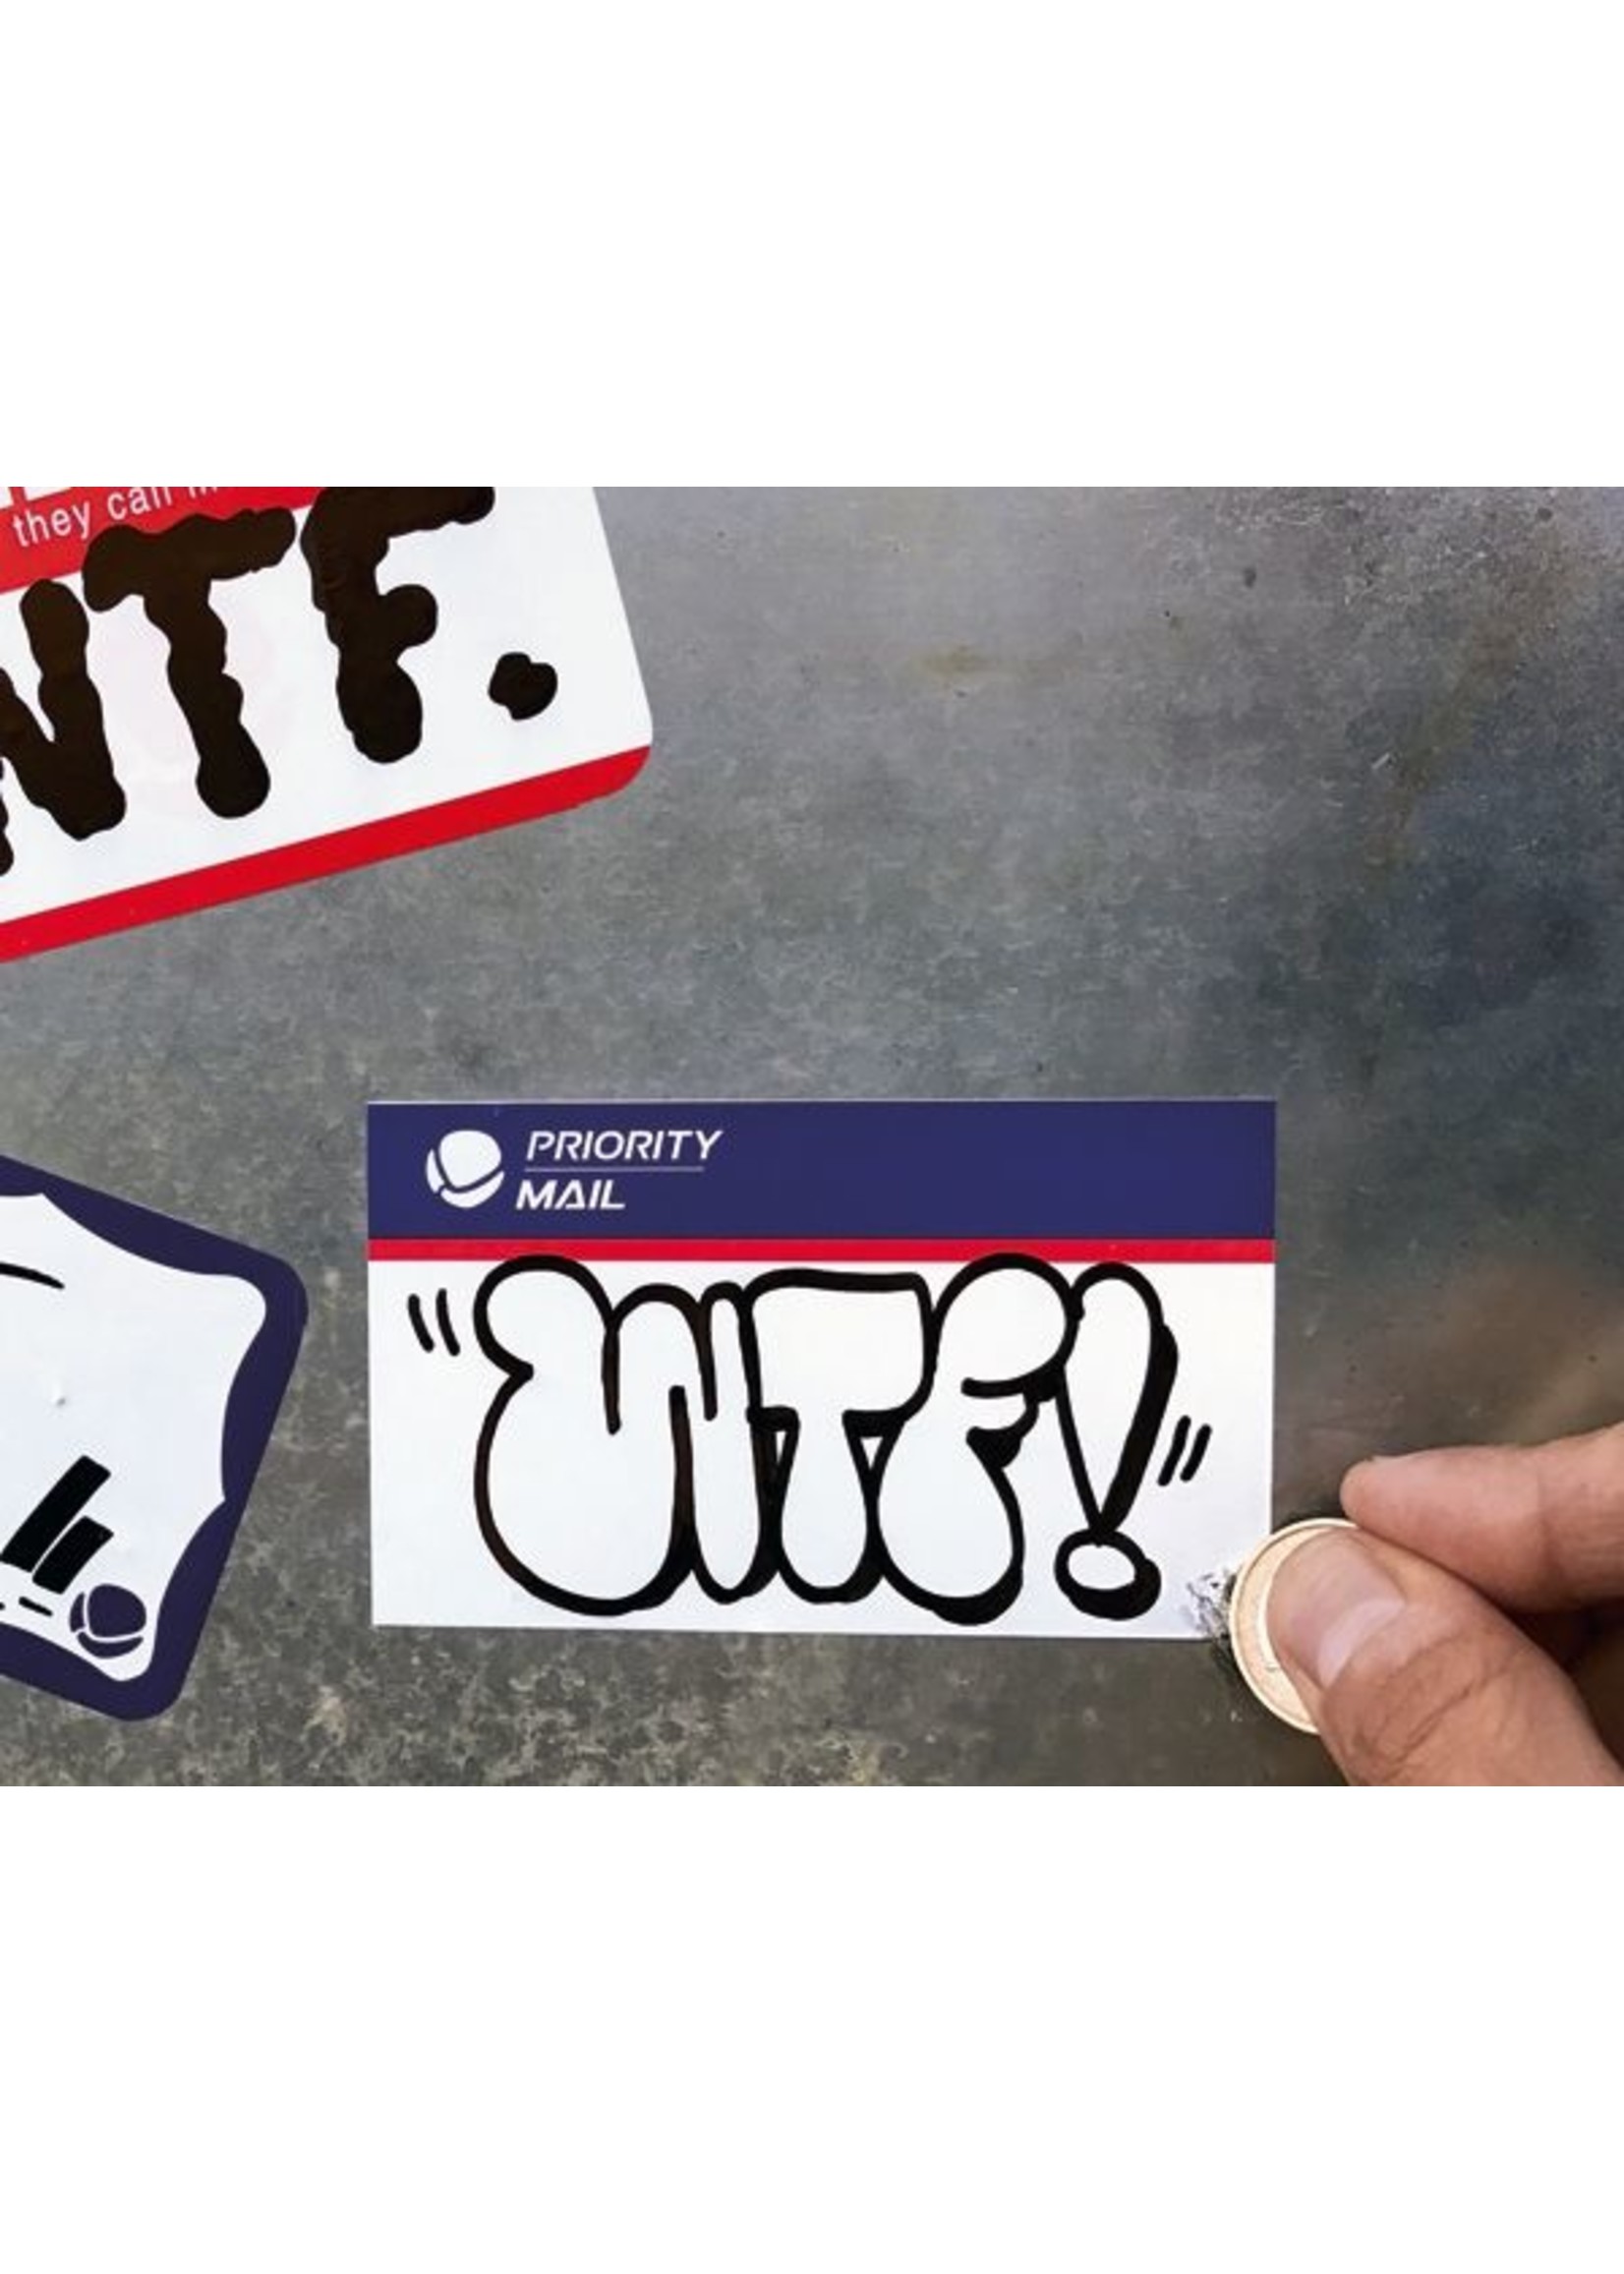 Mtn Wtf Permanent Stickers Priority Mail Graffiti Shop Berlin 2220